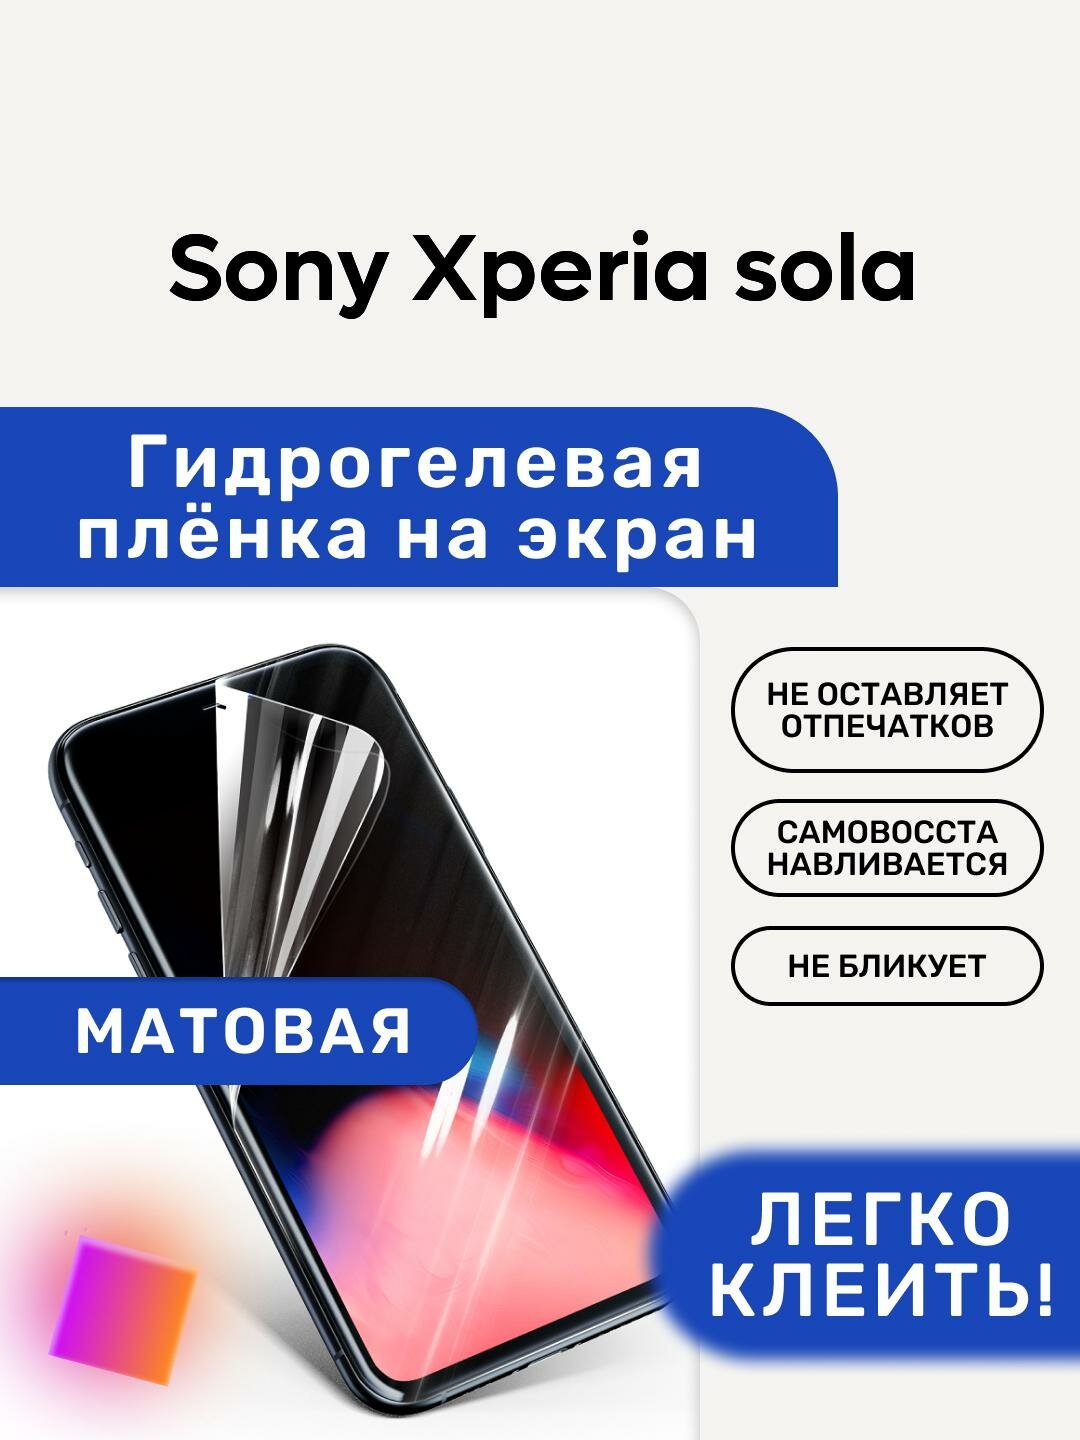 Матовая Гидрогелевая плёнка, полиуретановая, защита экрана Sony Xperia sola